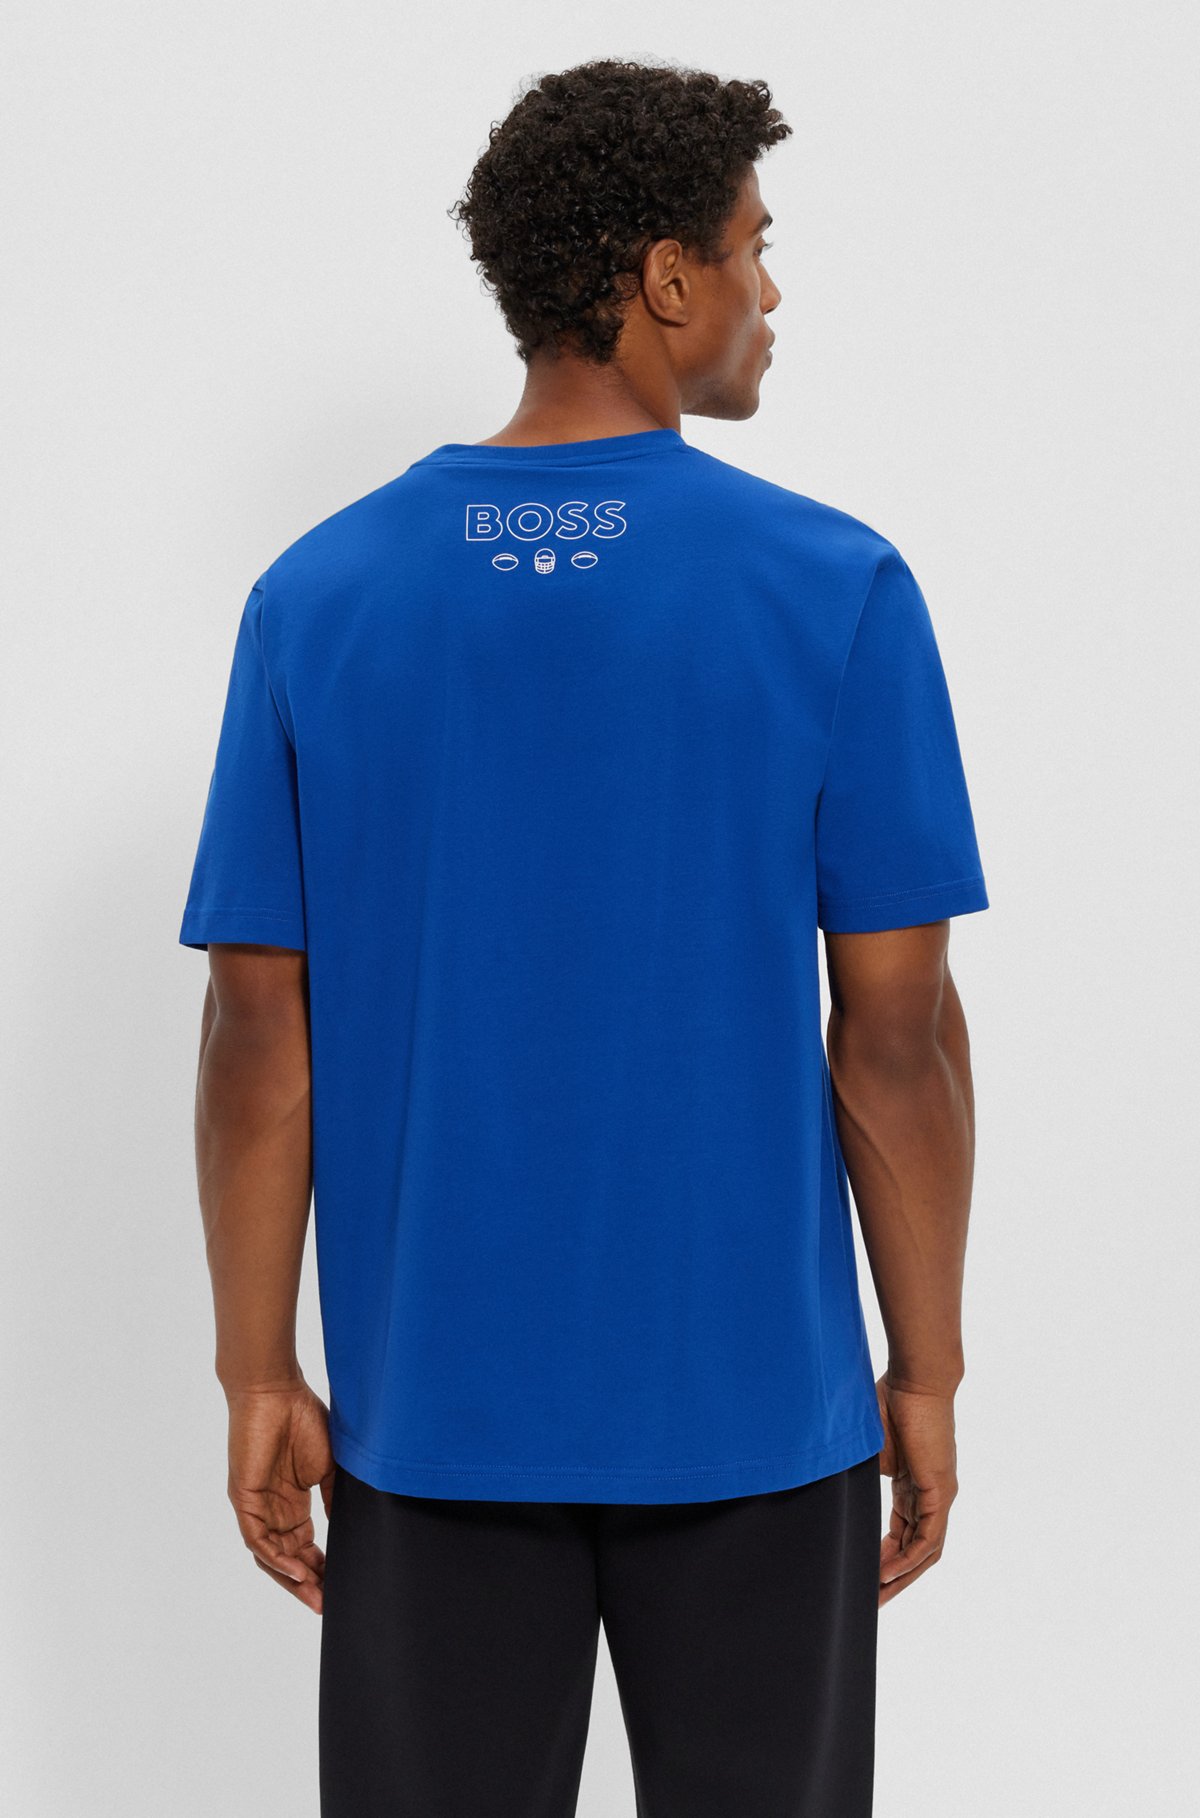  T-shirt en coton stretch BOSS x NFL avec logo du partenariat, Giants